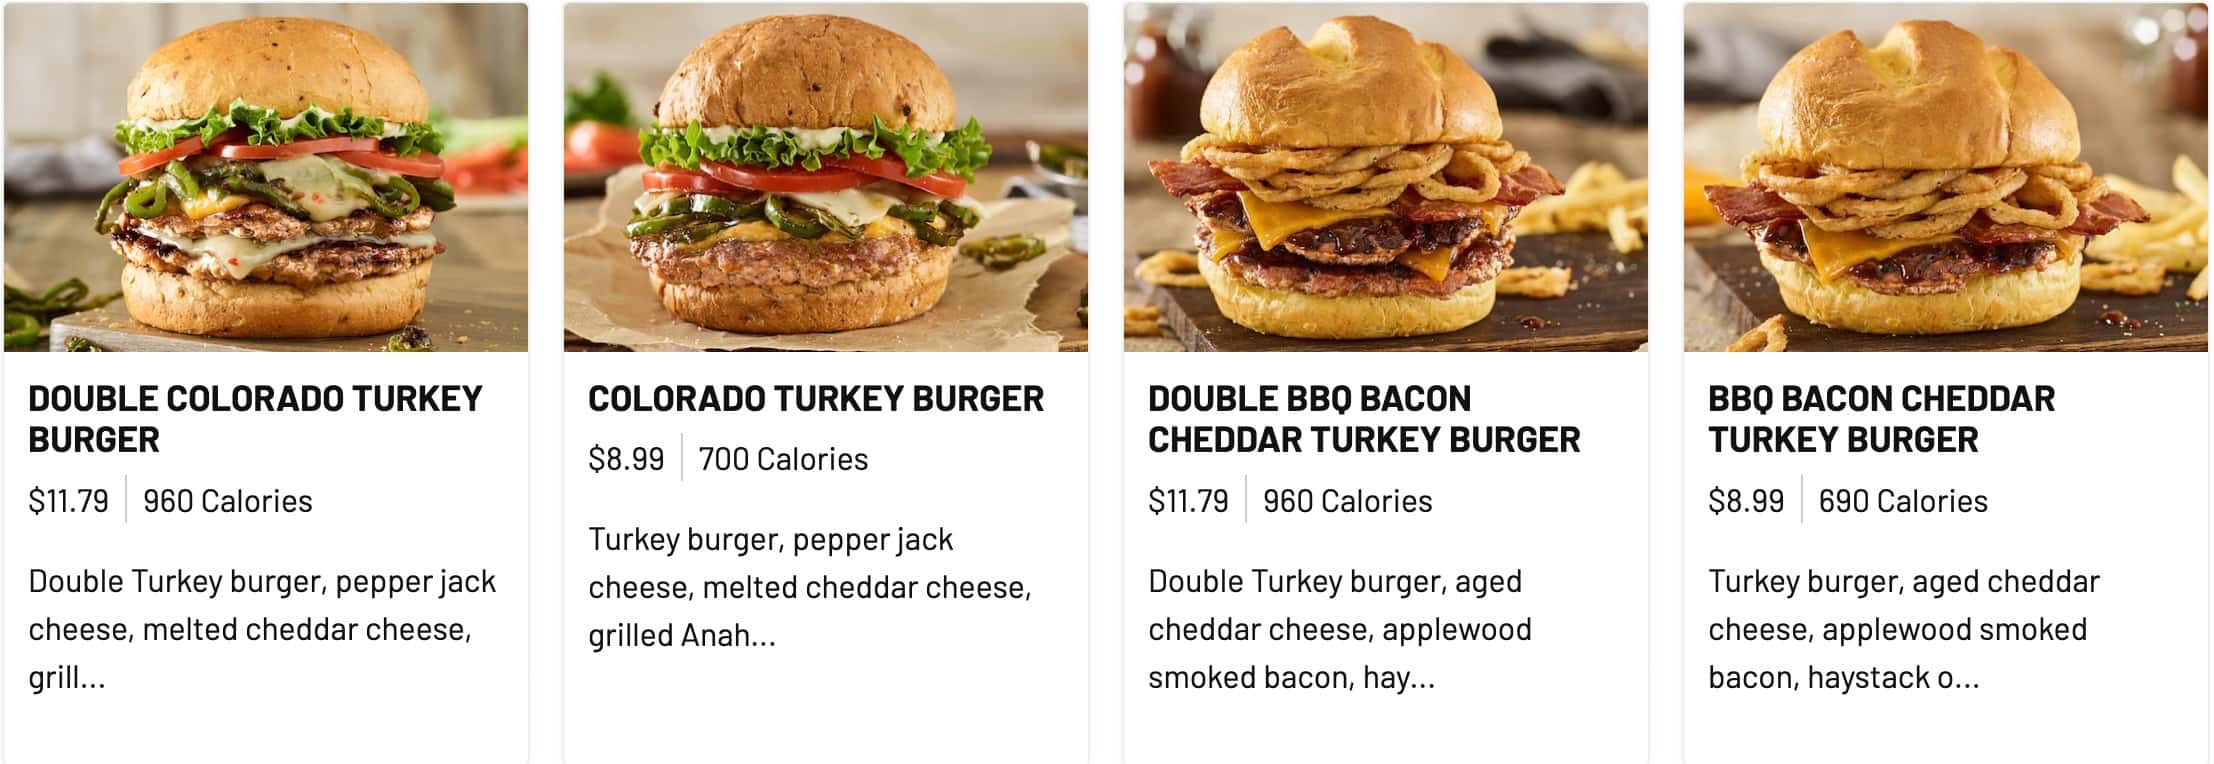 Smashburger Turkey Burgers Menu